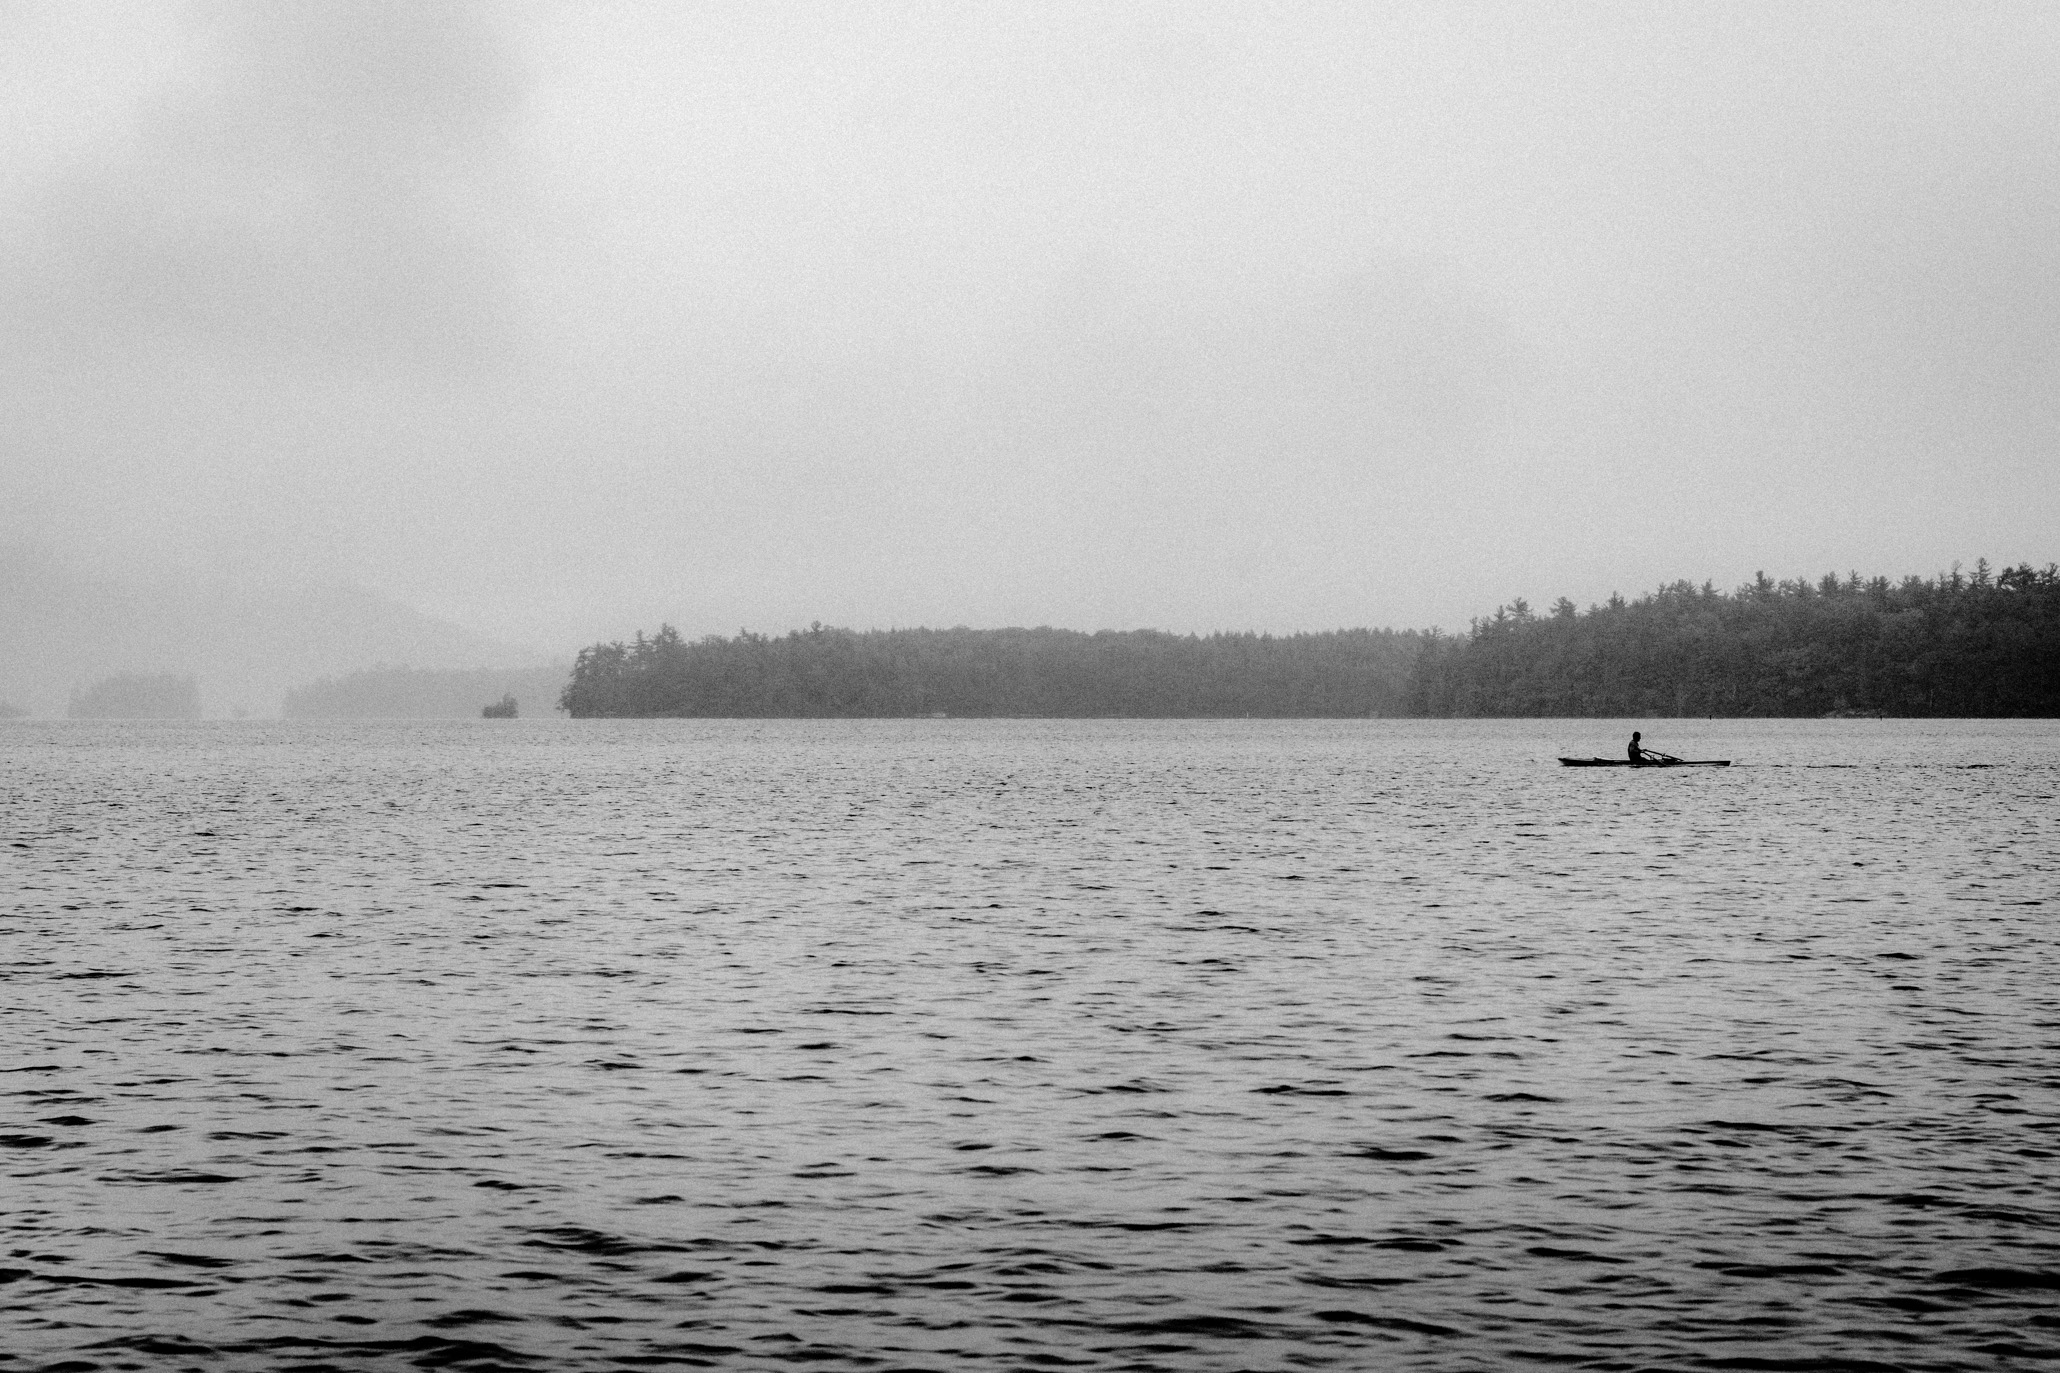 Rowing on Squam Lake